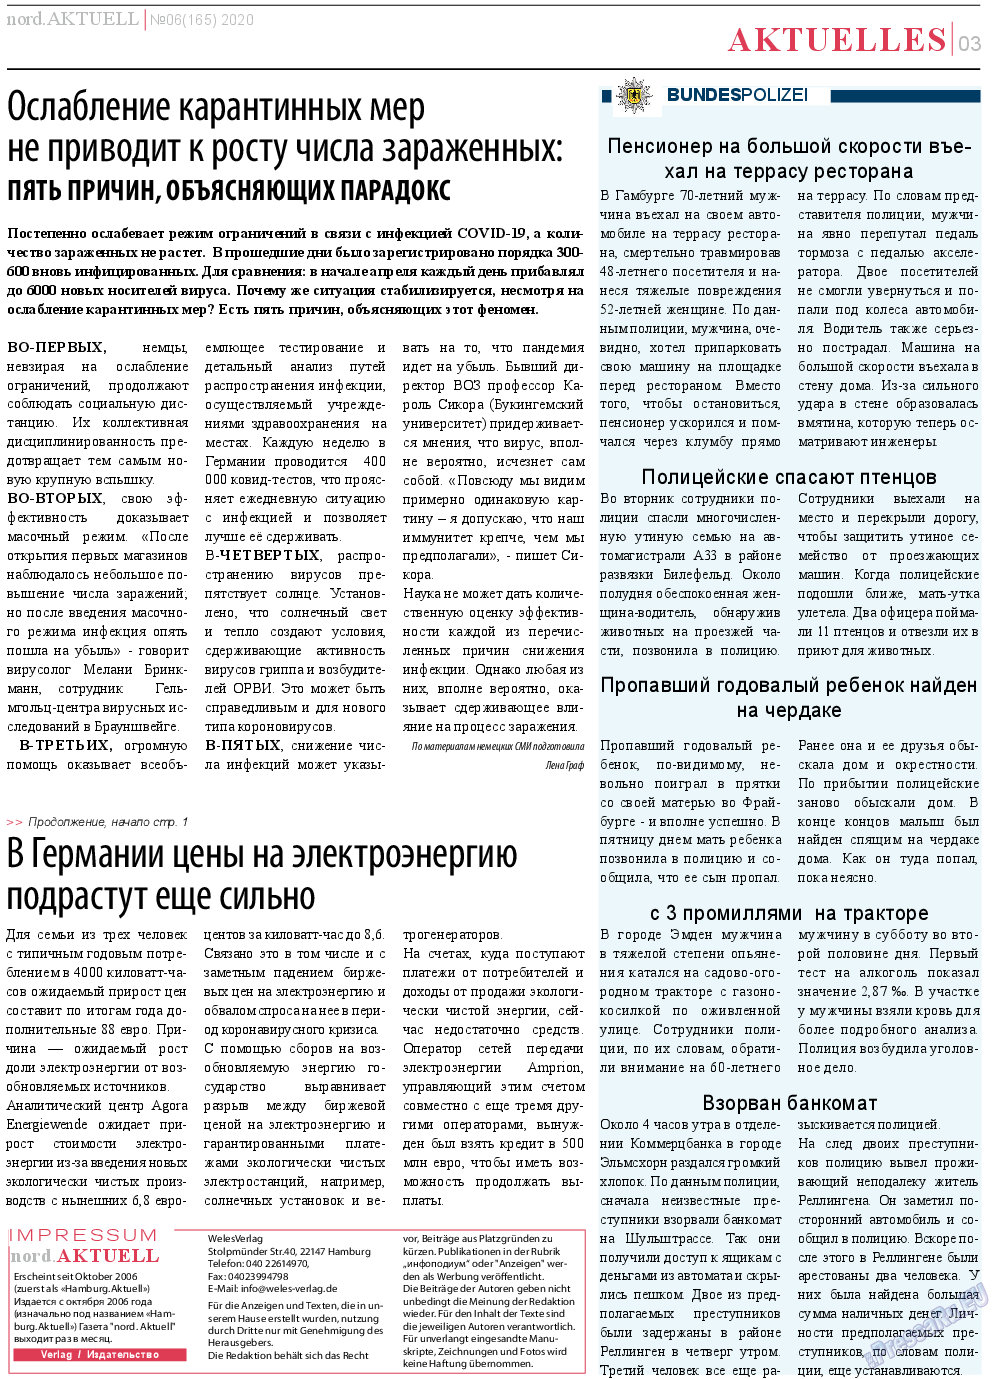 nord.Aktuell, газета. 2020 №6 стр.3